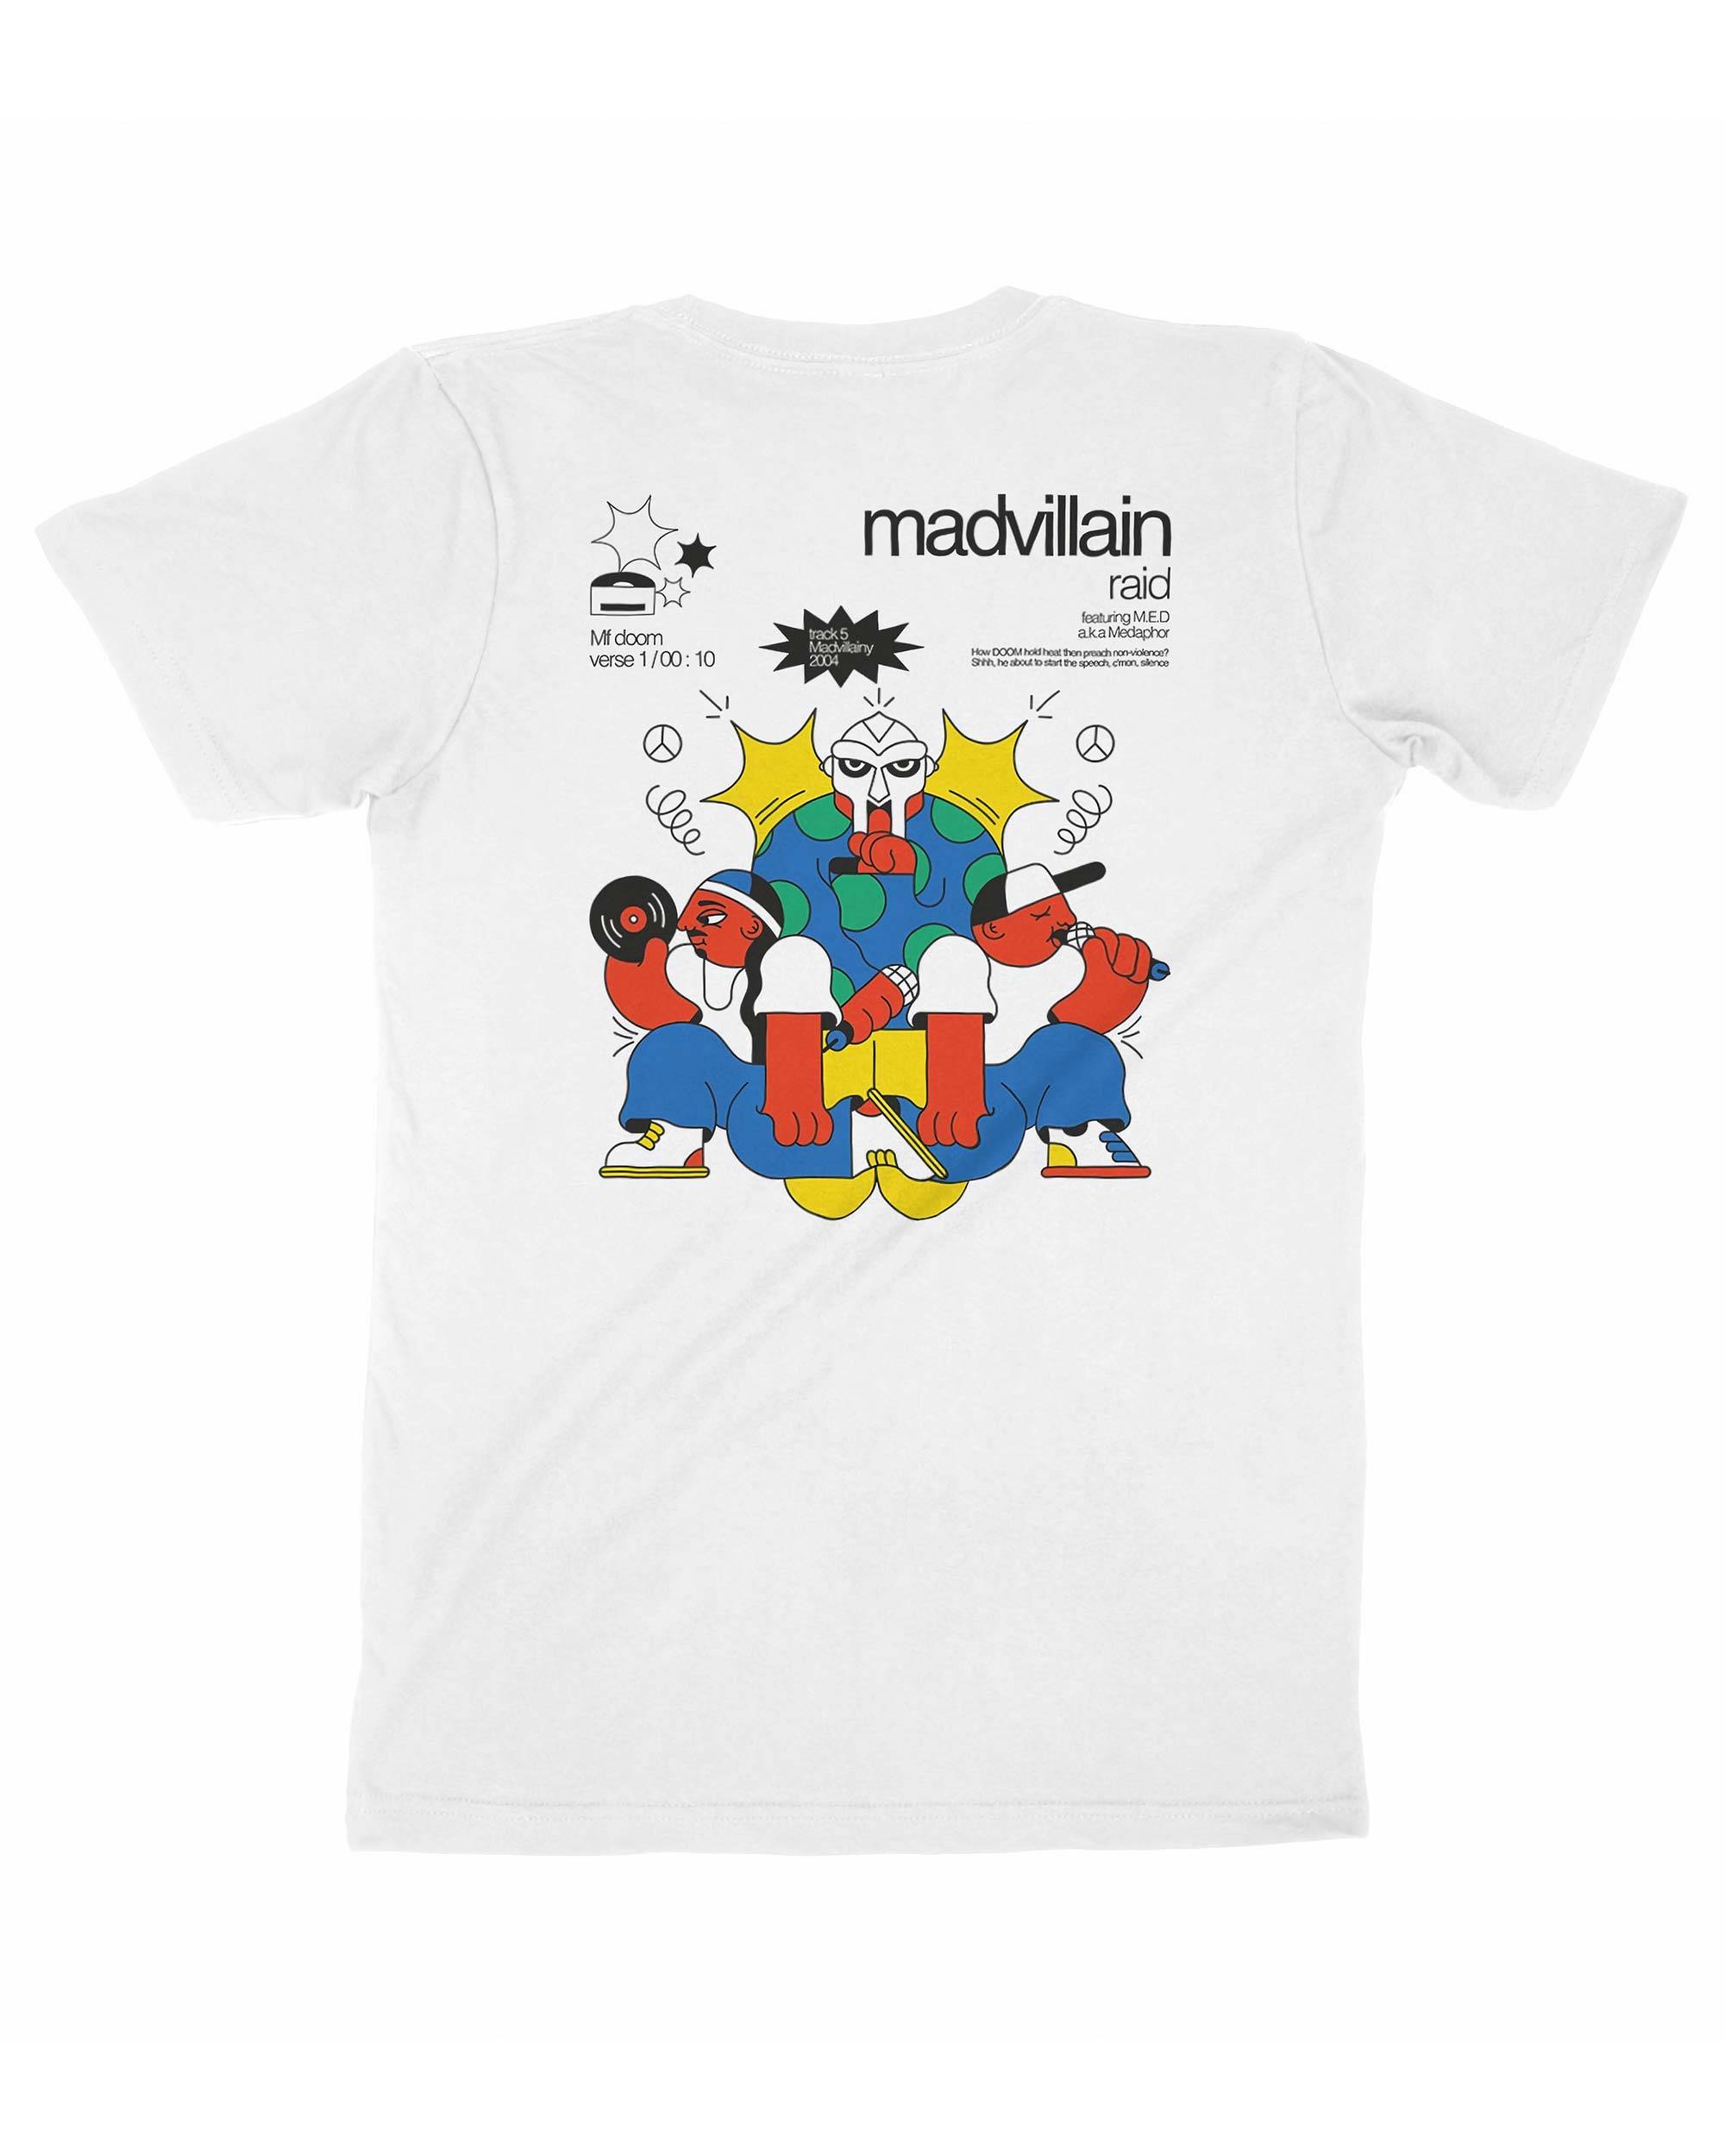 T-shirt Madvillain Grafitee